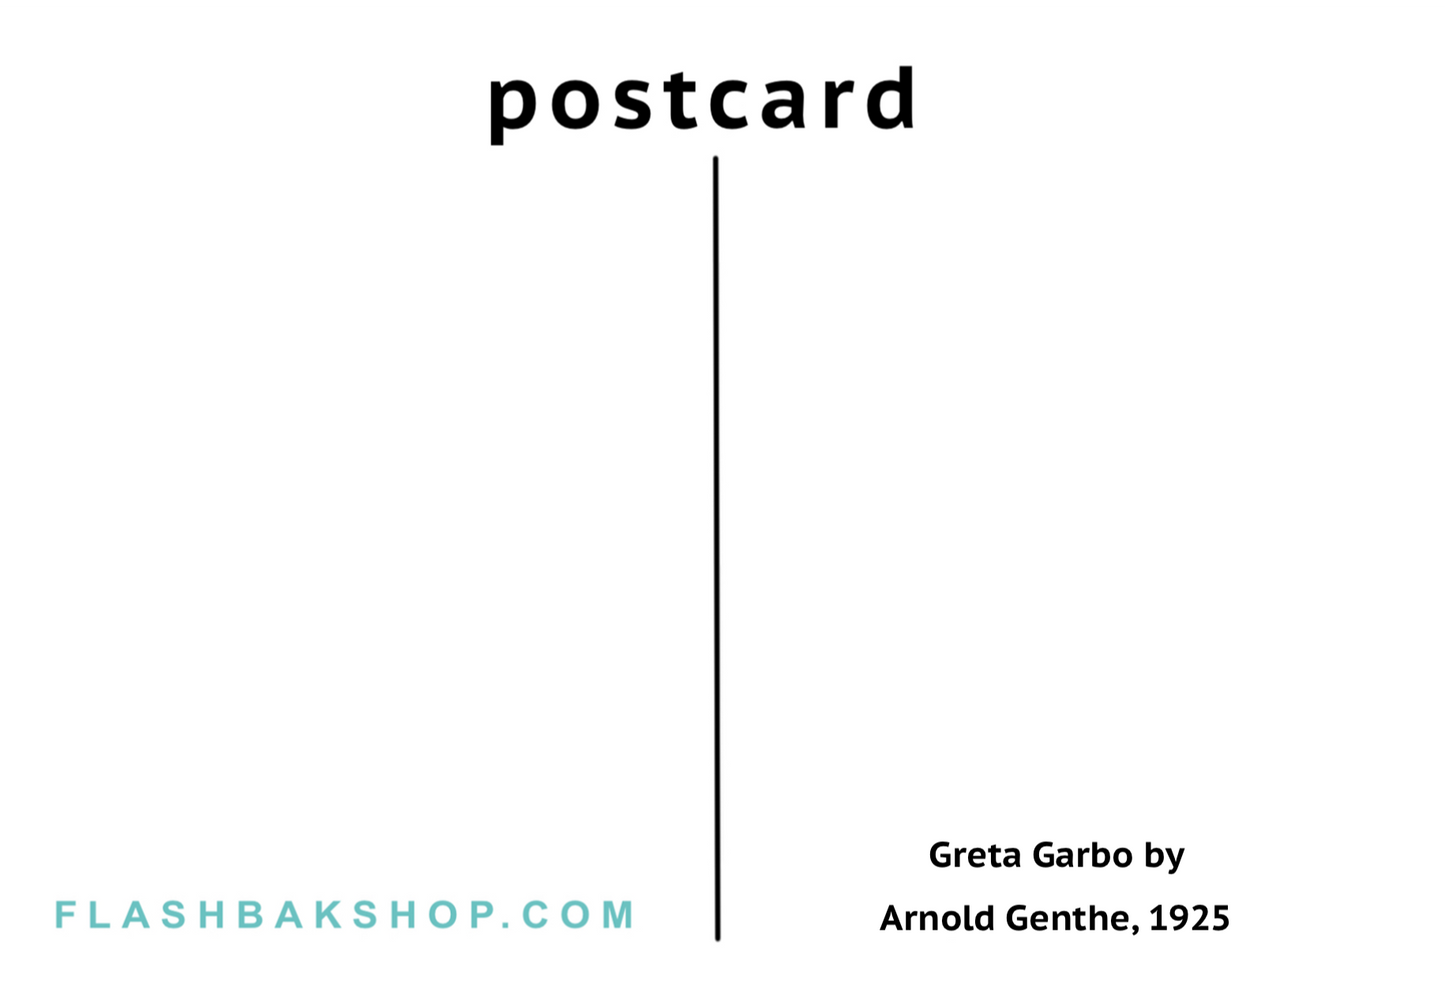 Greta Garbo by Arnold Genthe, 1925 - Postcard